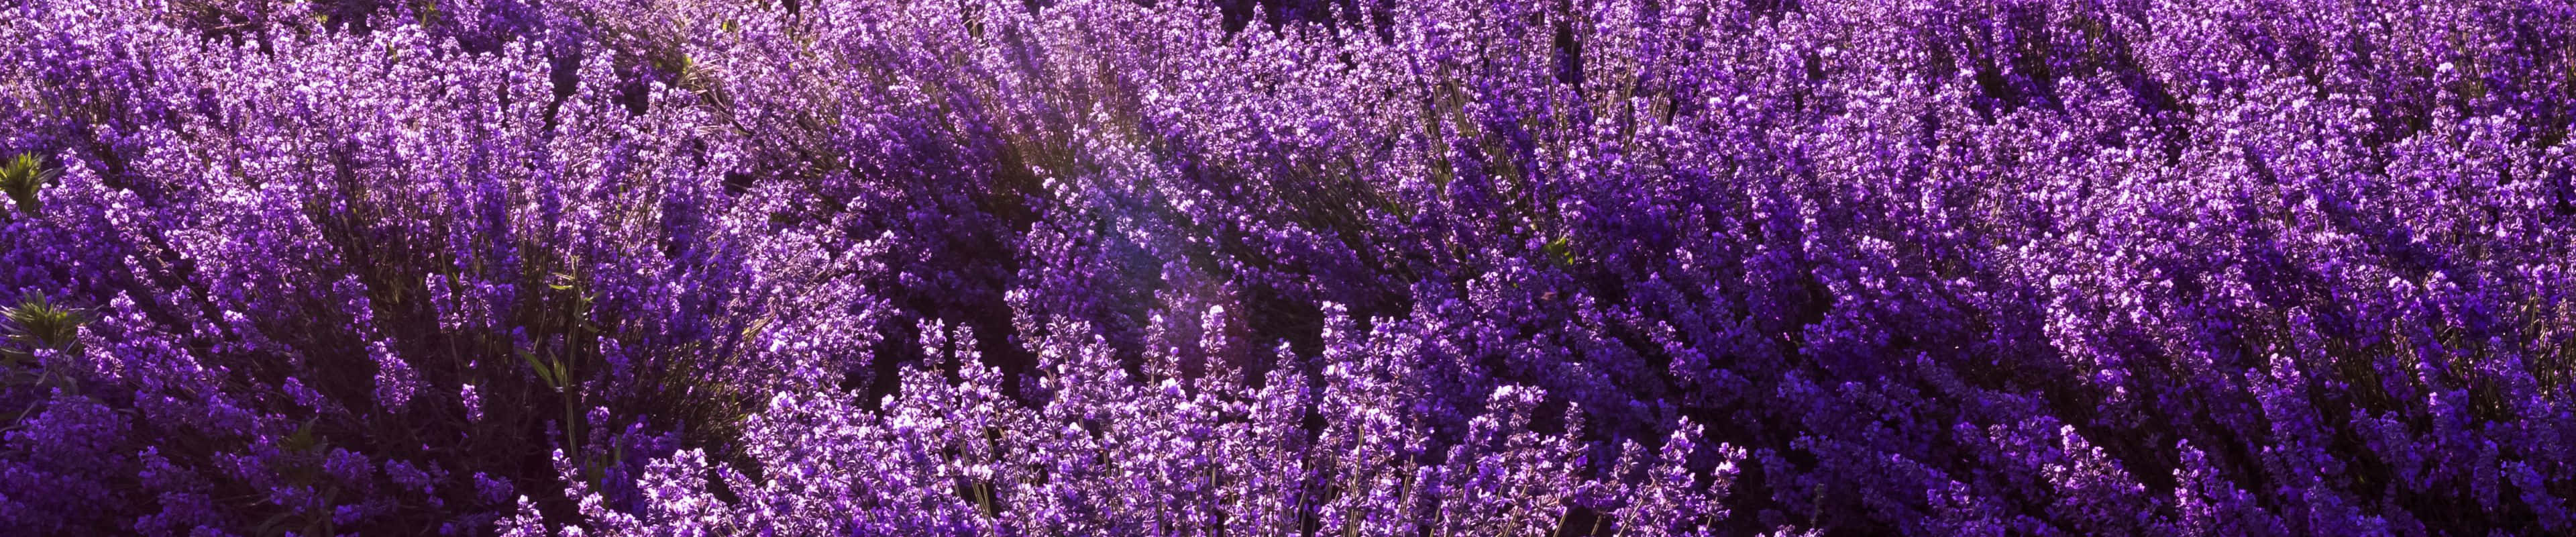 Lavender Field In The Sun Wallpaper